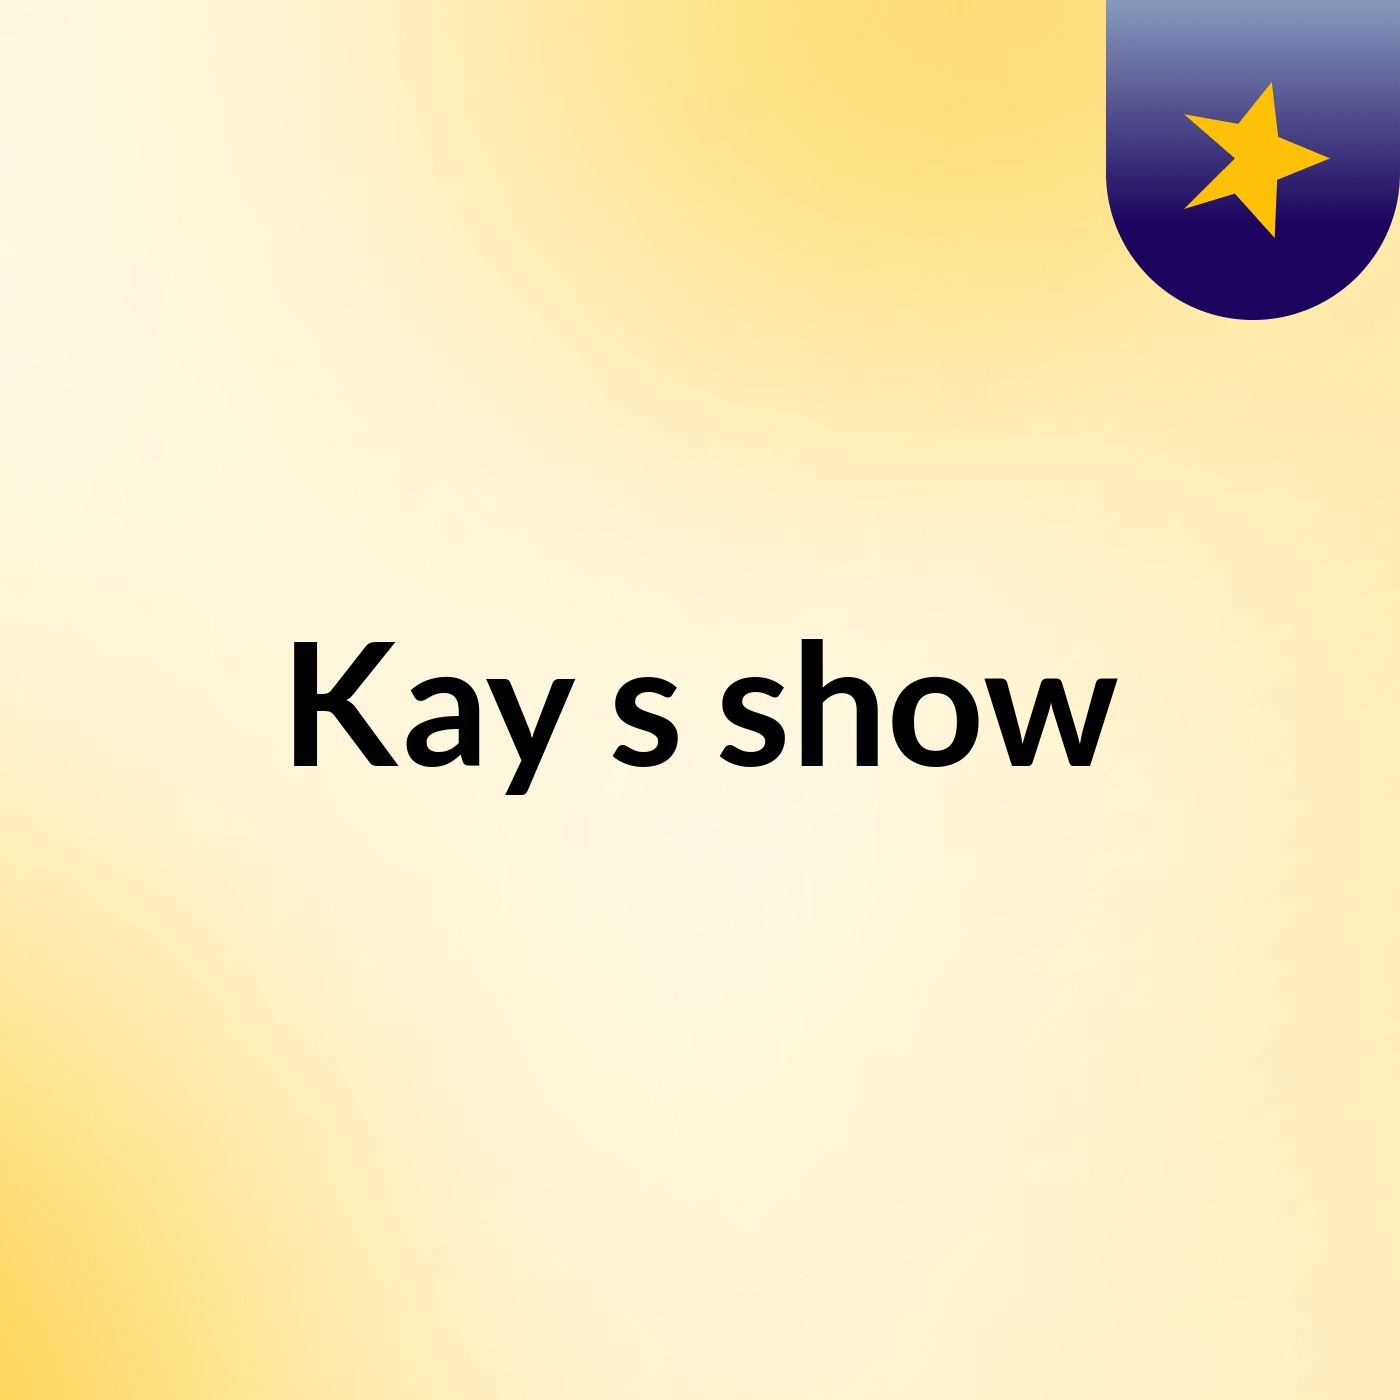 Episode 2 - p3 - Kay's show